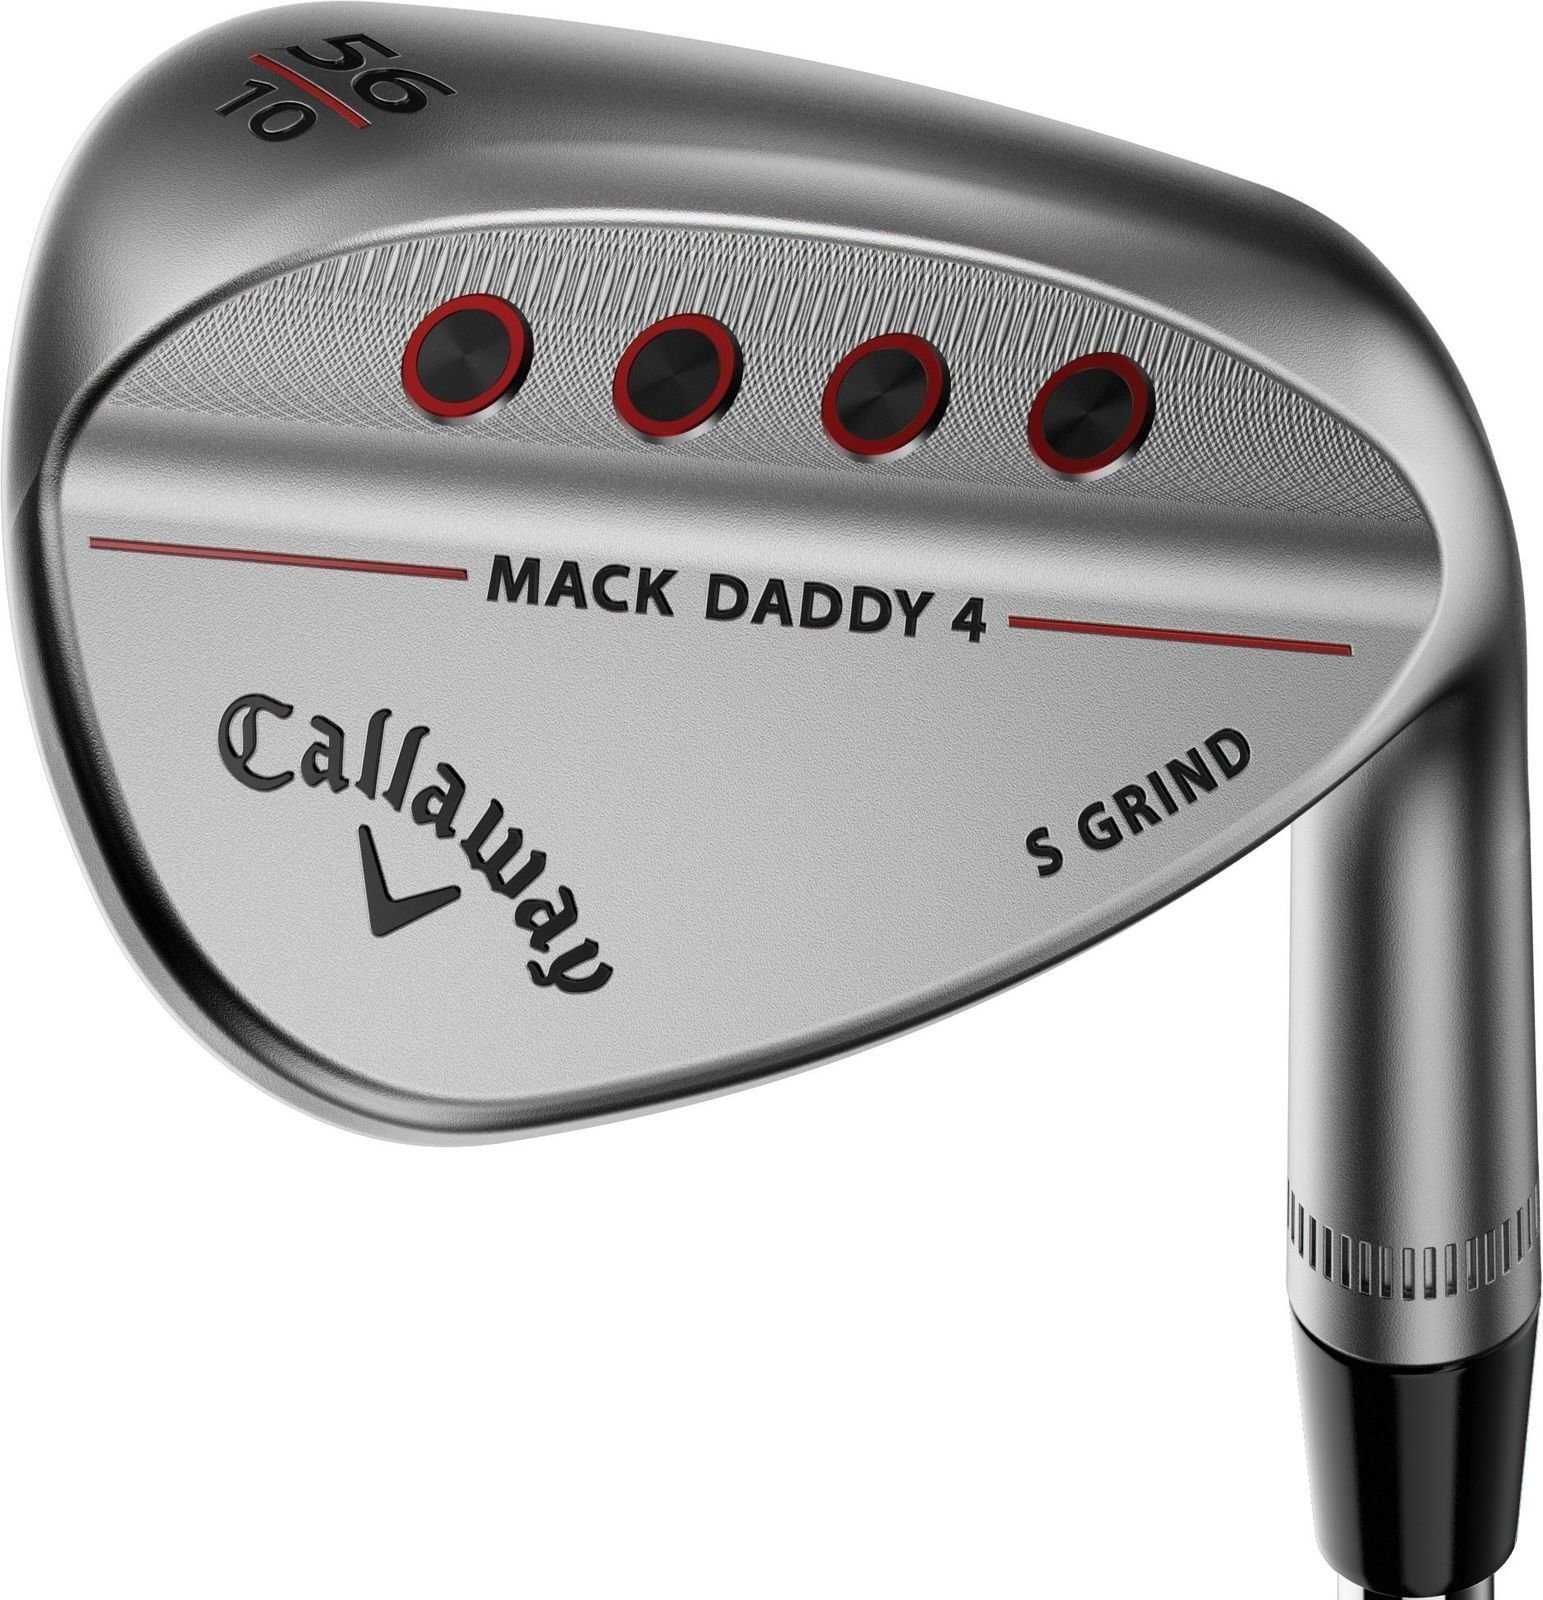 Mazza da golf - wedge Callaway Mack Daddy 4 Chrome Wedge 54-08 C-Grind destro